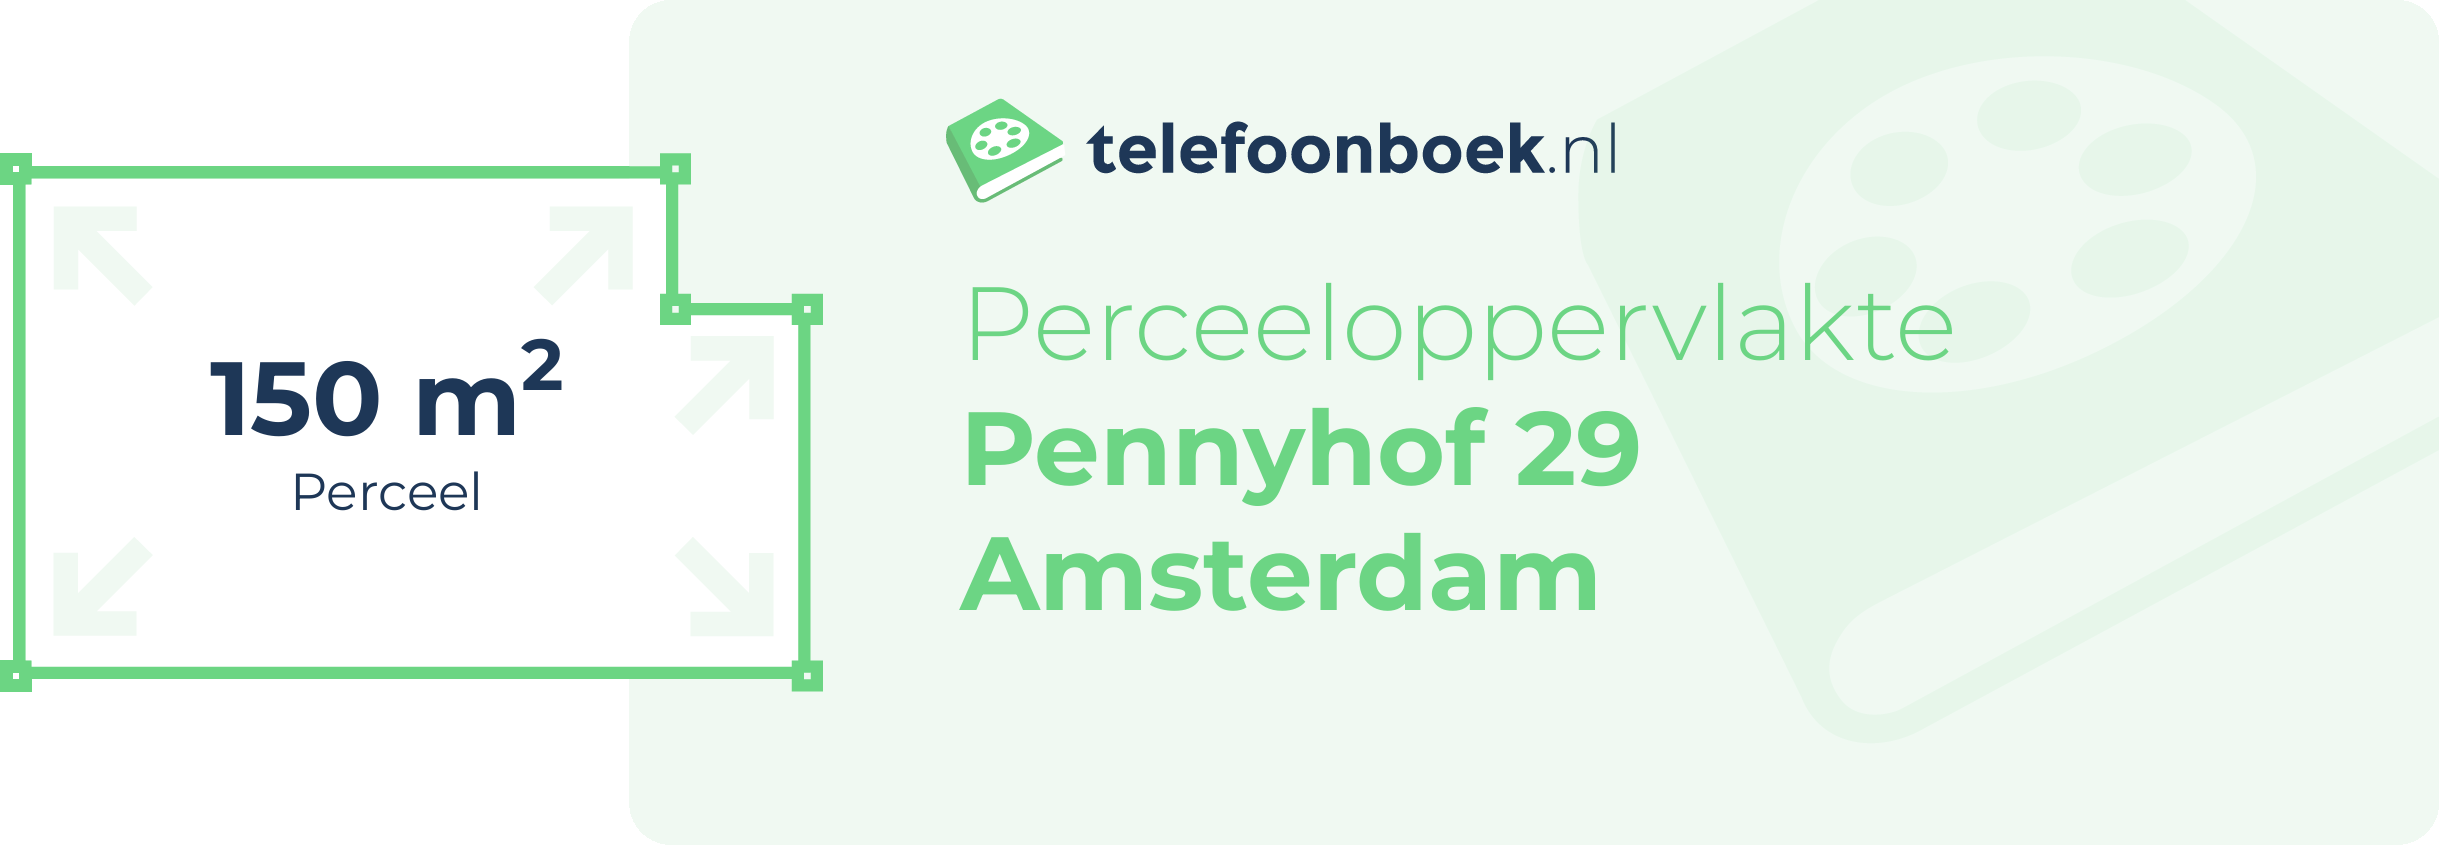 Perceeloppervlakte Pennyhof 29 Amsterdam